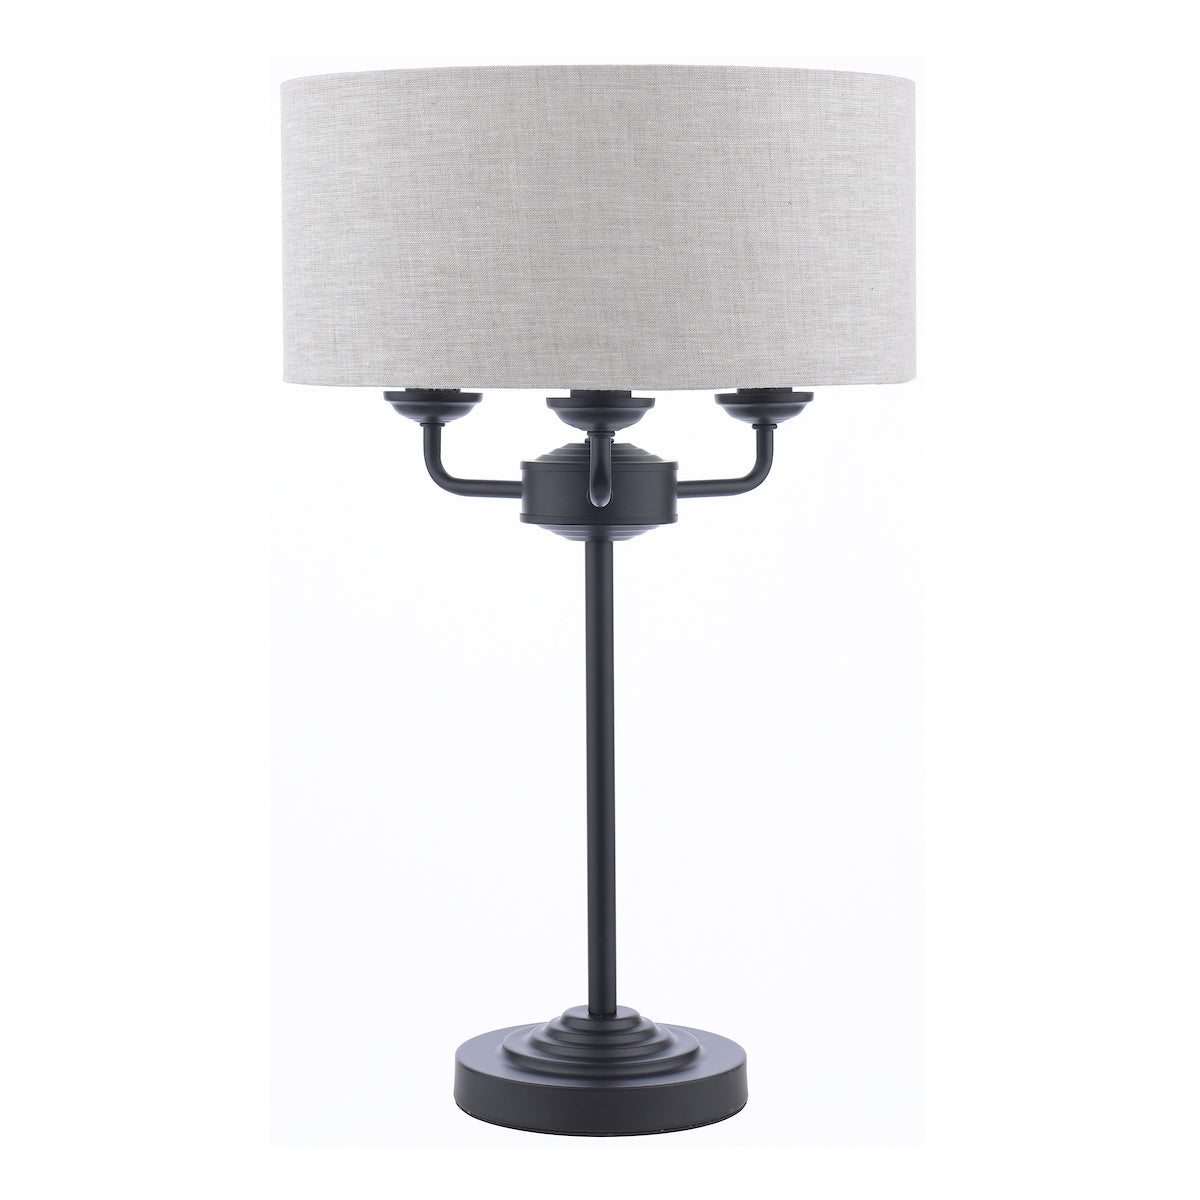 Laura Ashley Sorrento Table Lamp 3 Light Black